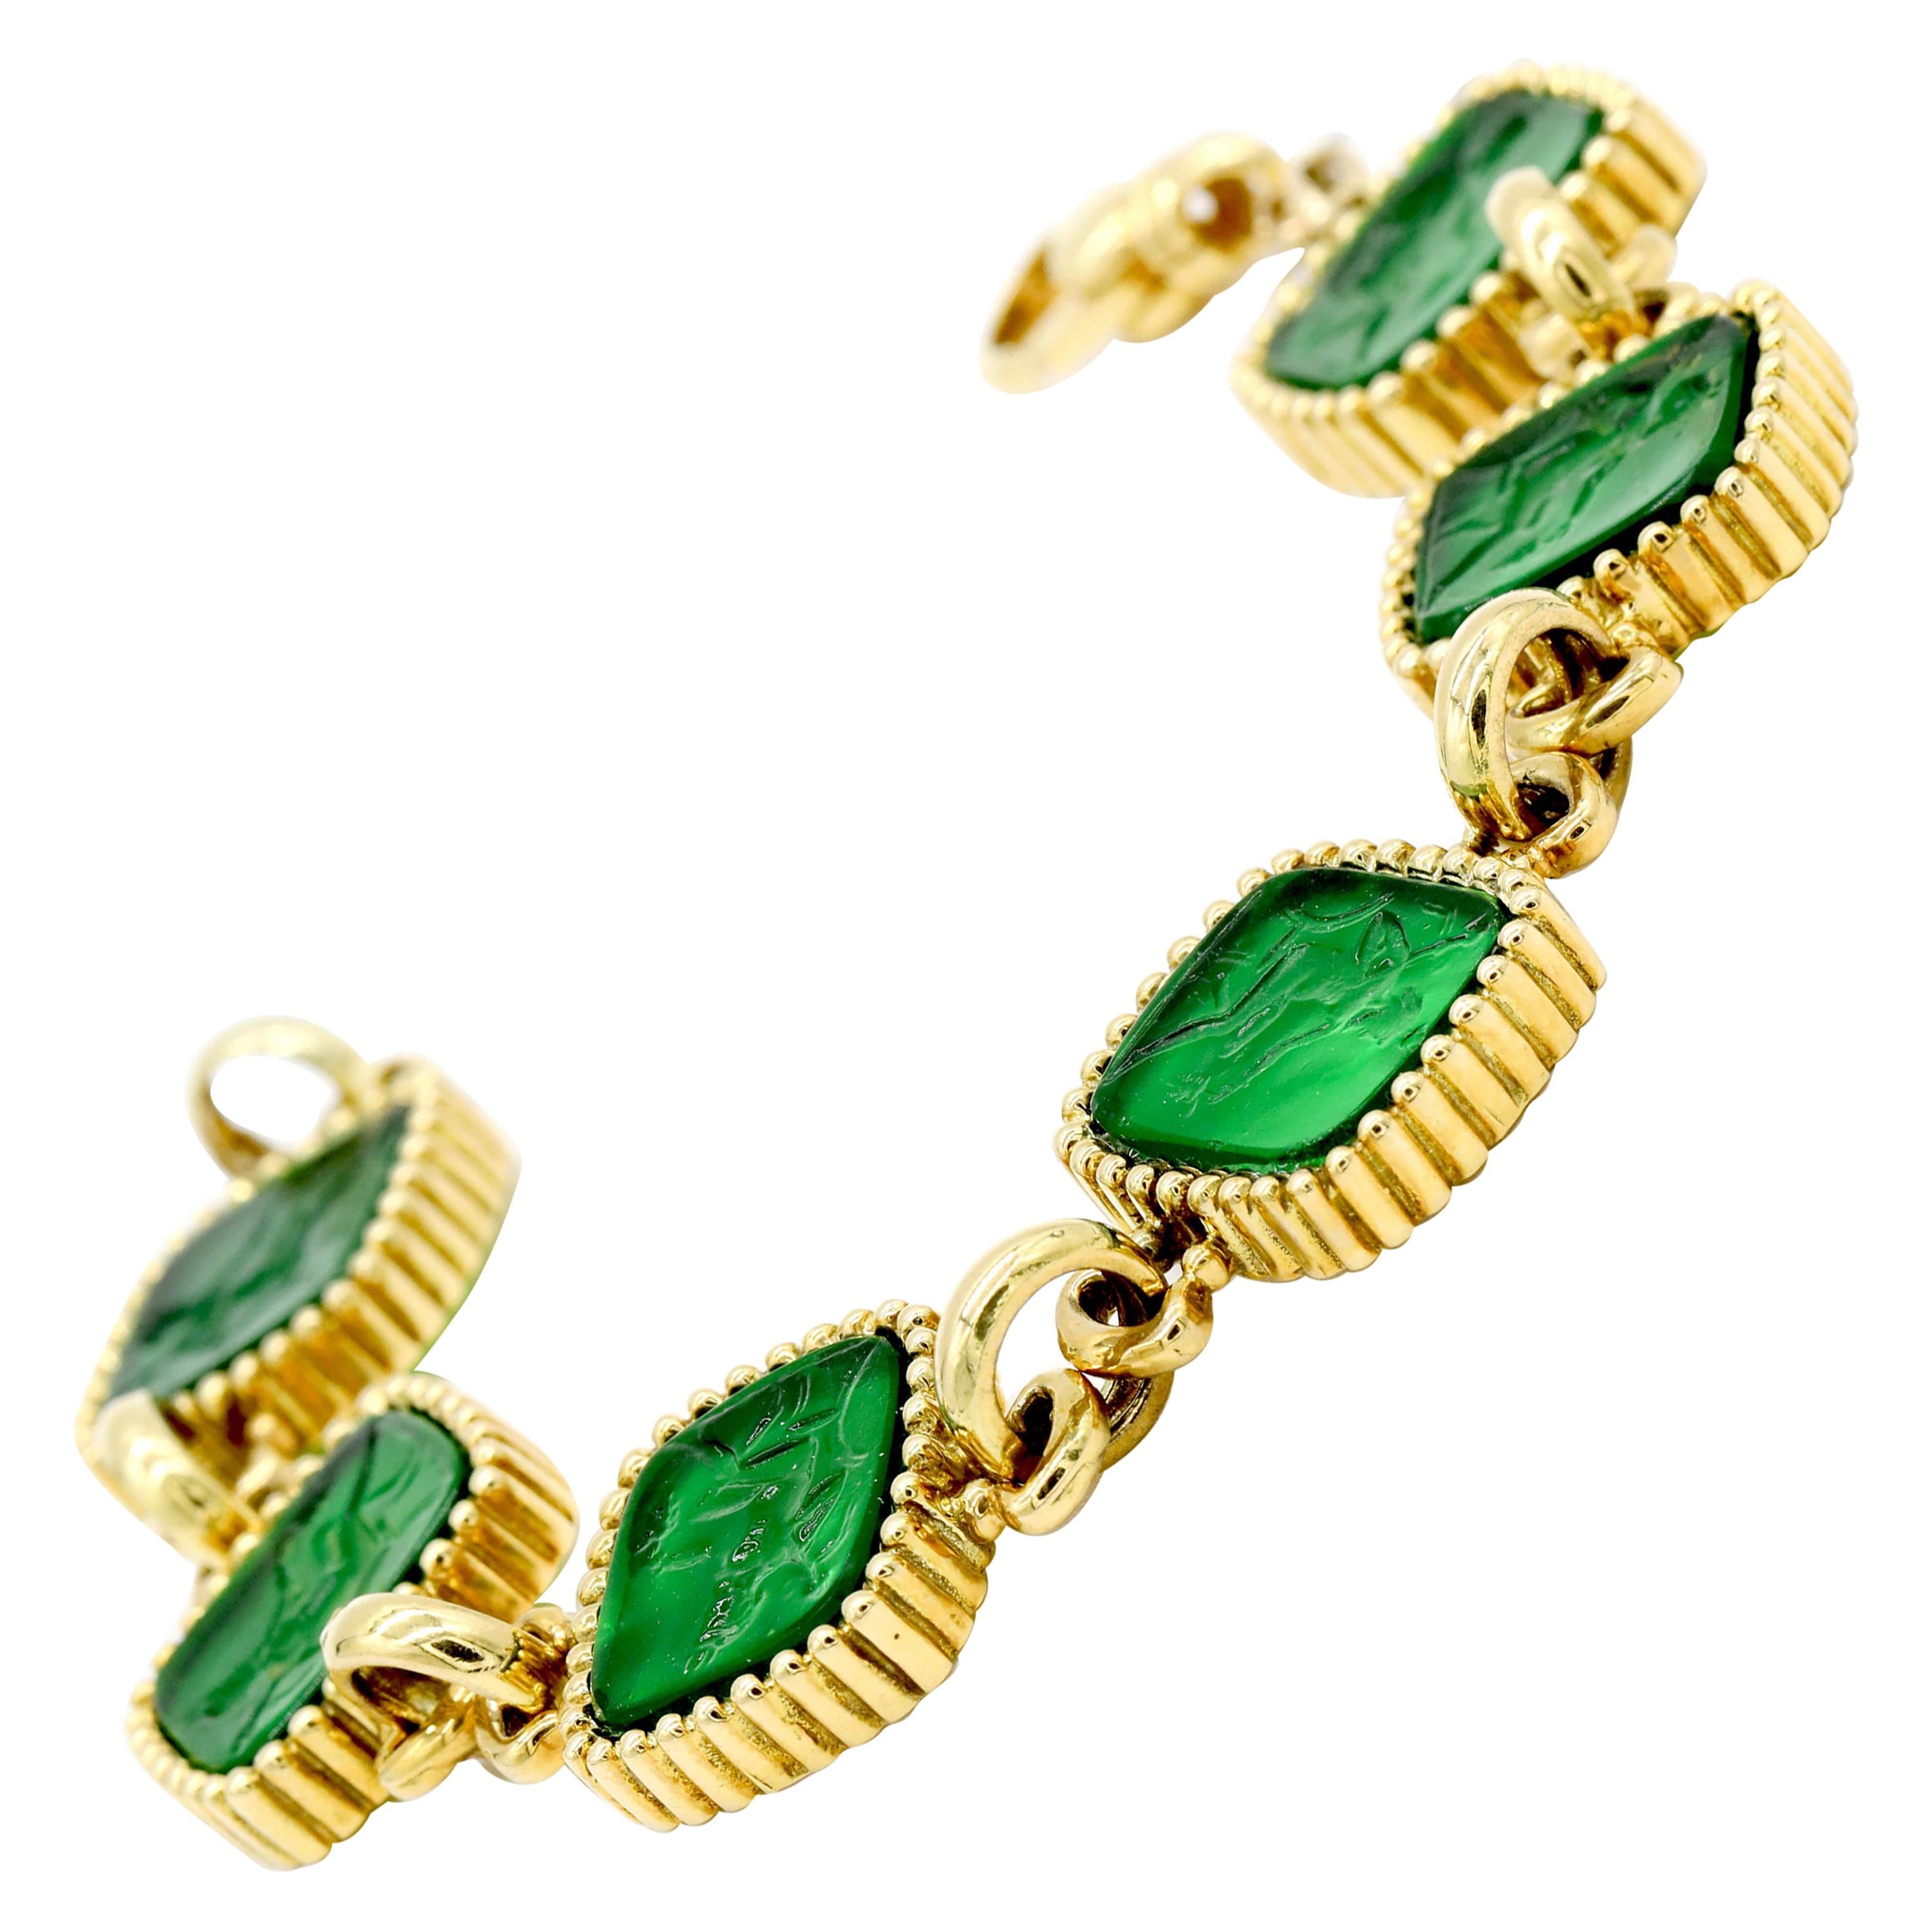 Green Carved Italian Murano Glass Cameo Intaglio Bracelet 18 Karat Yellow Gold